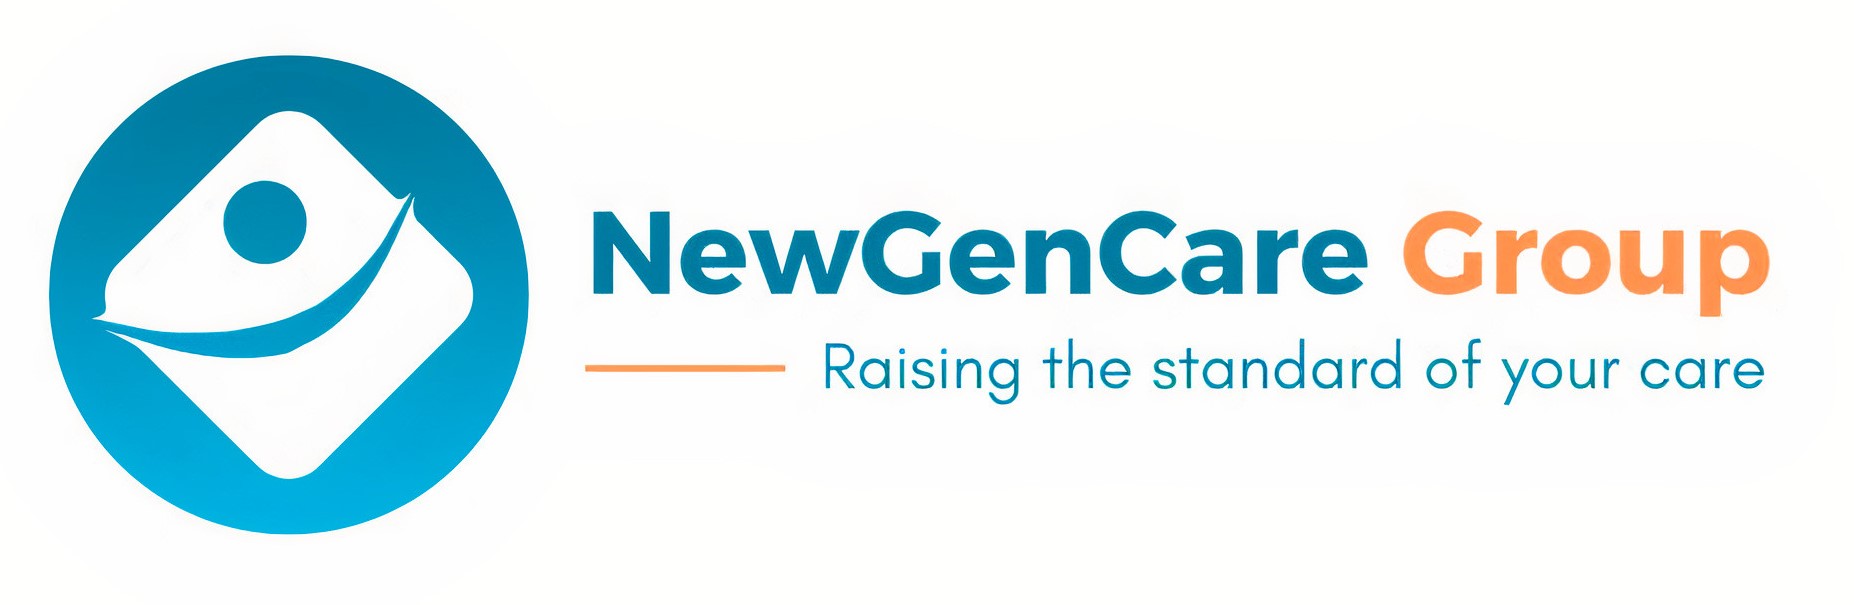 Newgen Care Group logo